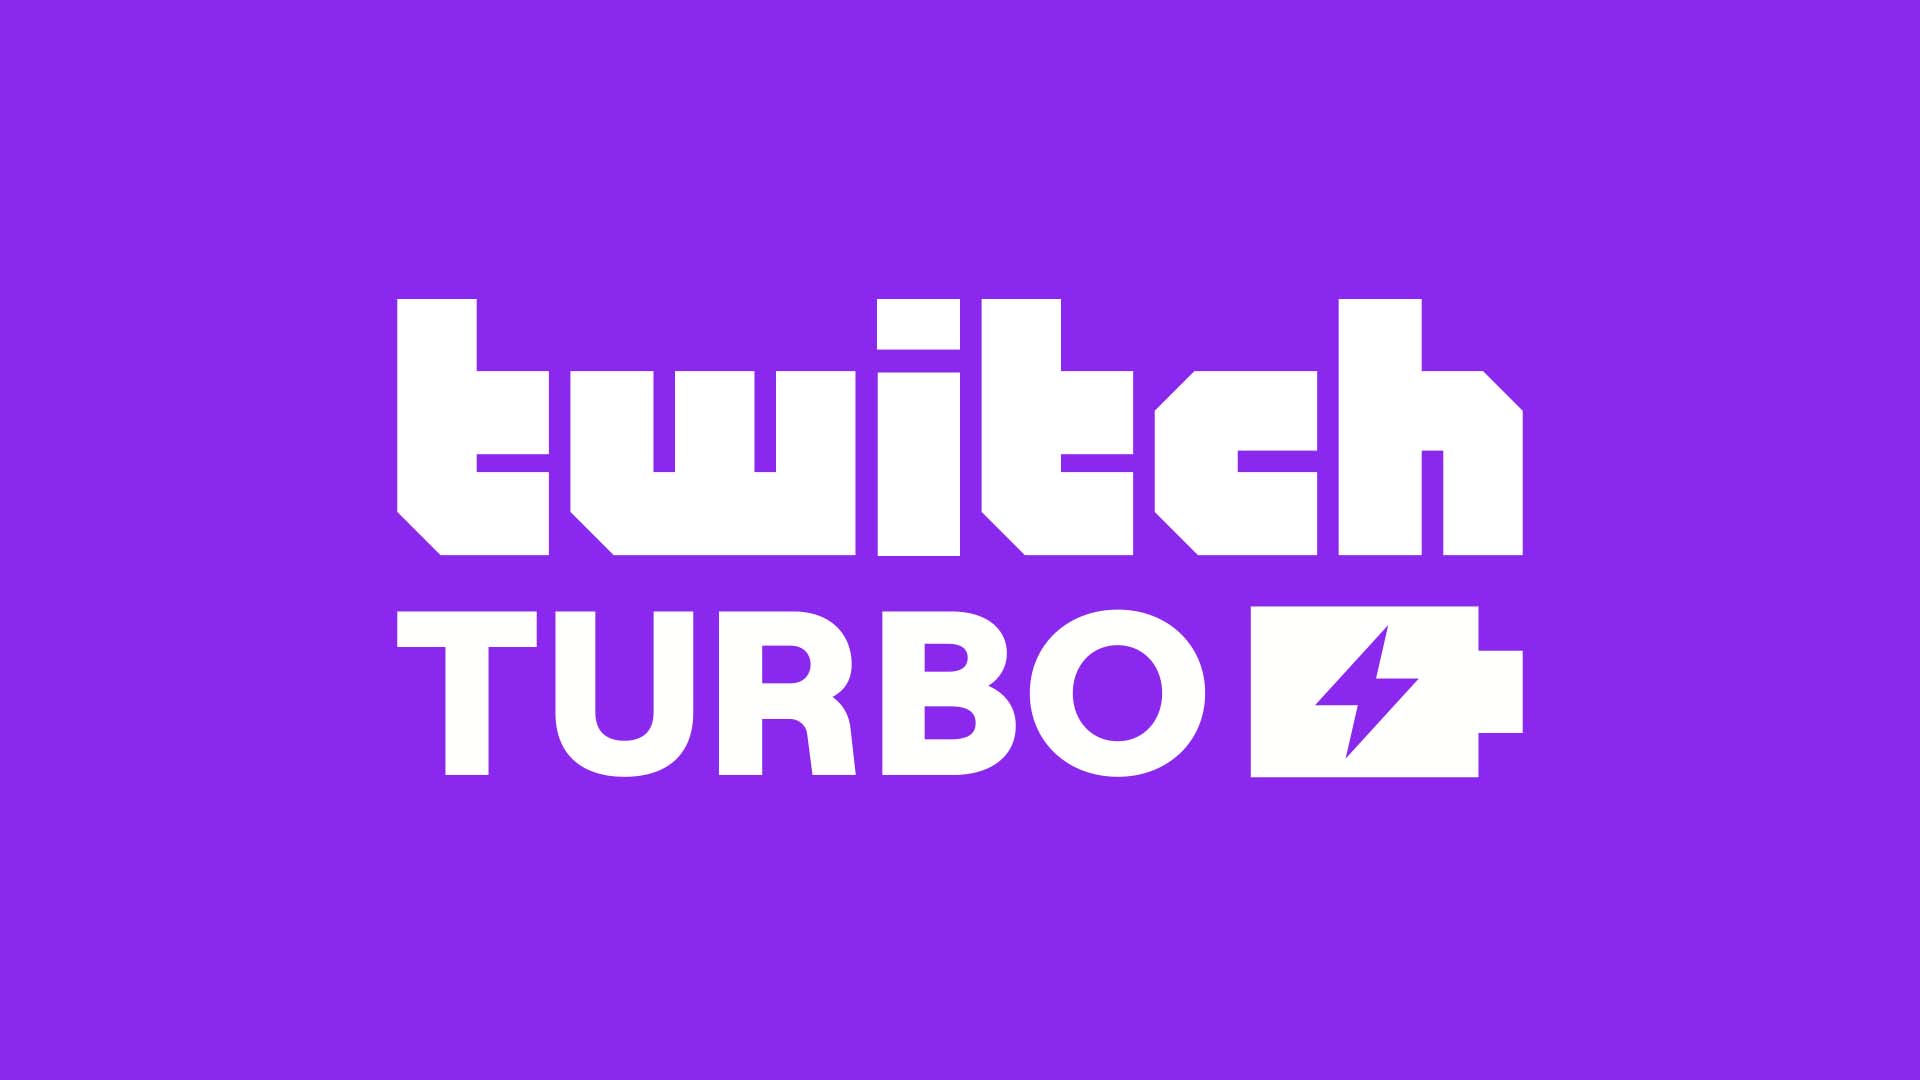 que-es-Twitch-Turbo